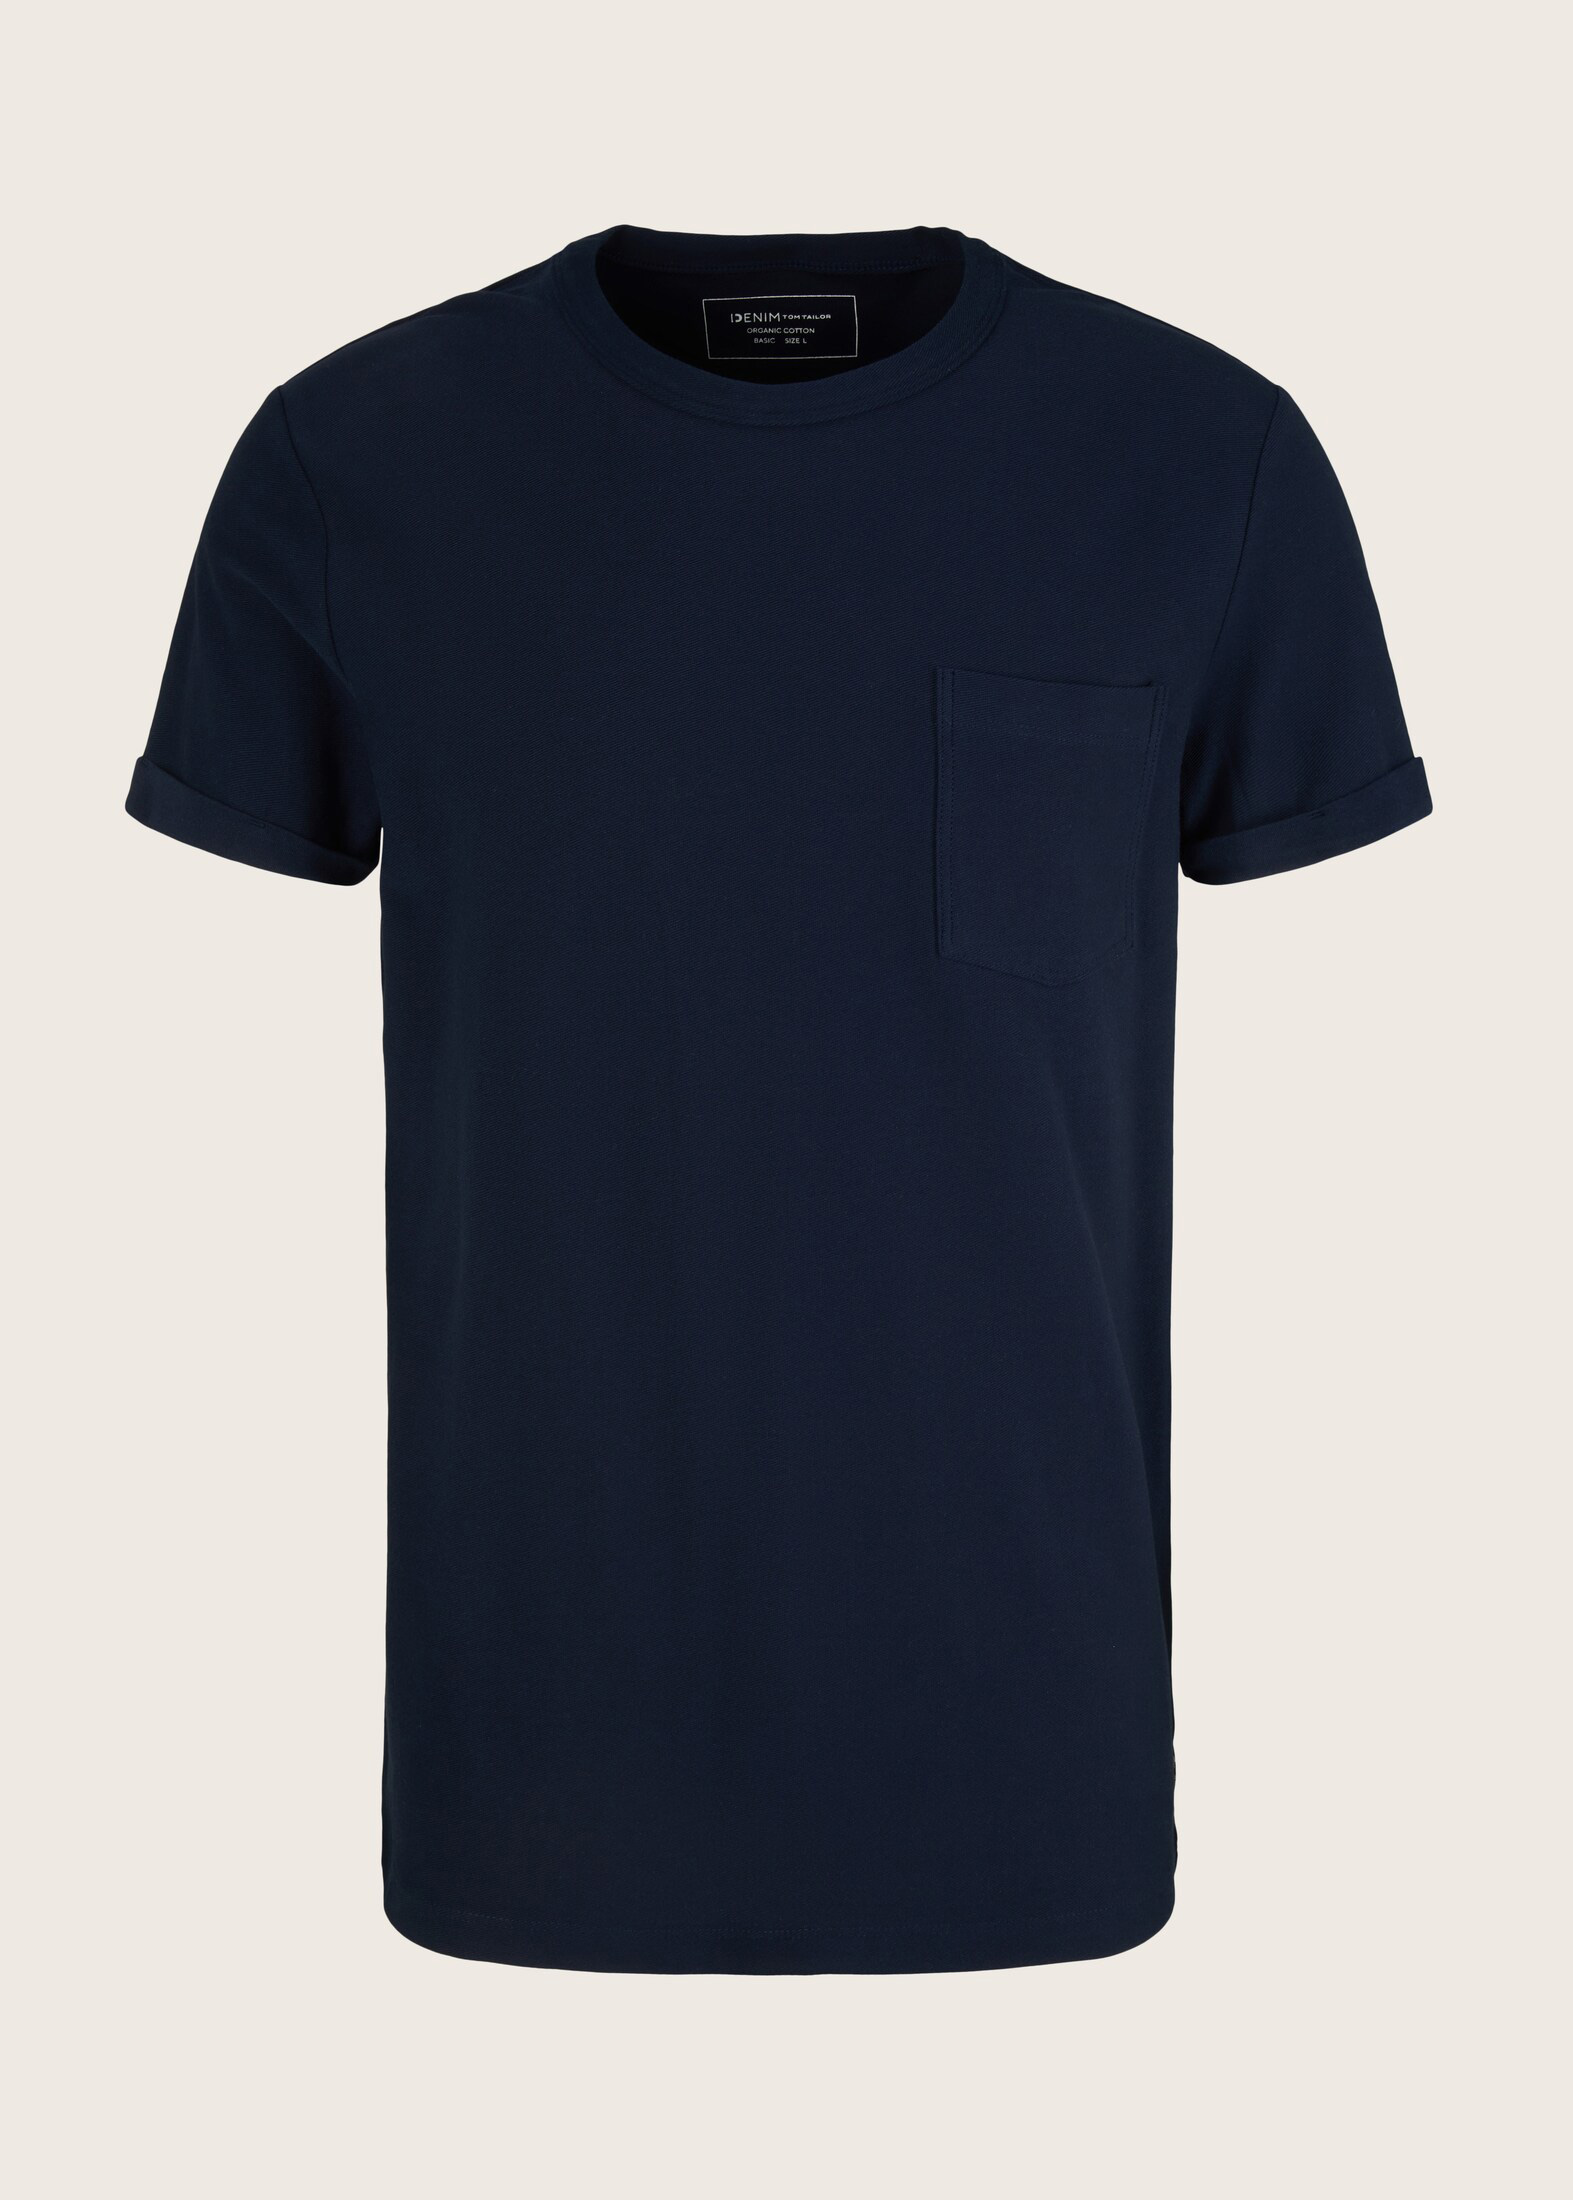 Men's T-shirt / Tee Denim Tom Tailor® T-shirt With A Chest Pocket - Sky  Captain Blue 1030694-10668 / Navy